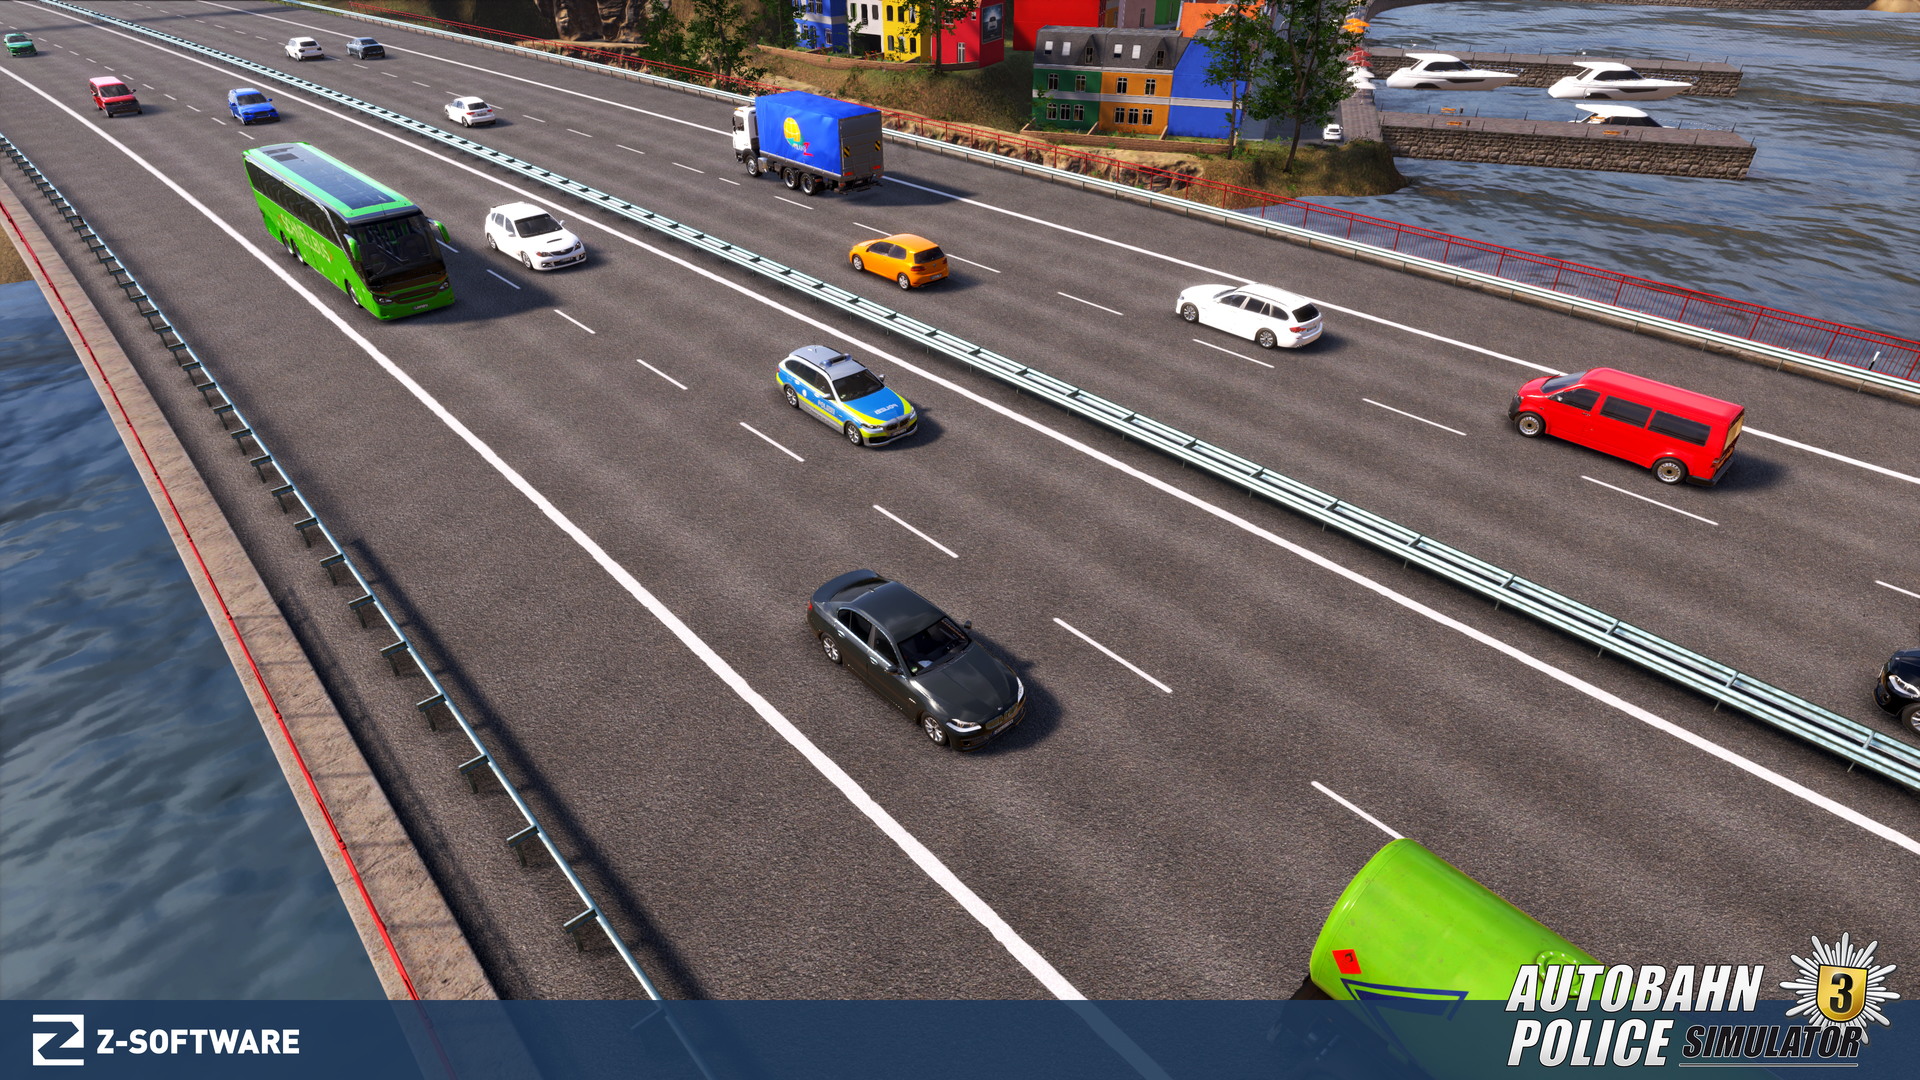 Autobahn Police Simulator 3 - screenshot 14